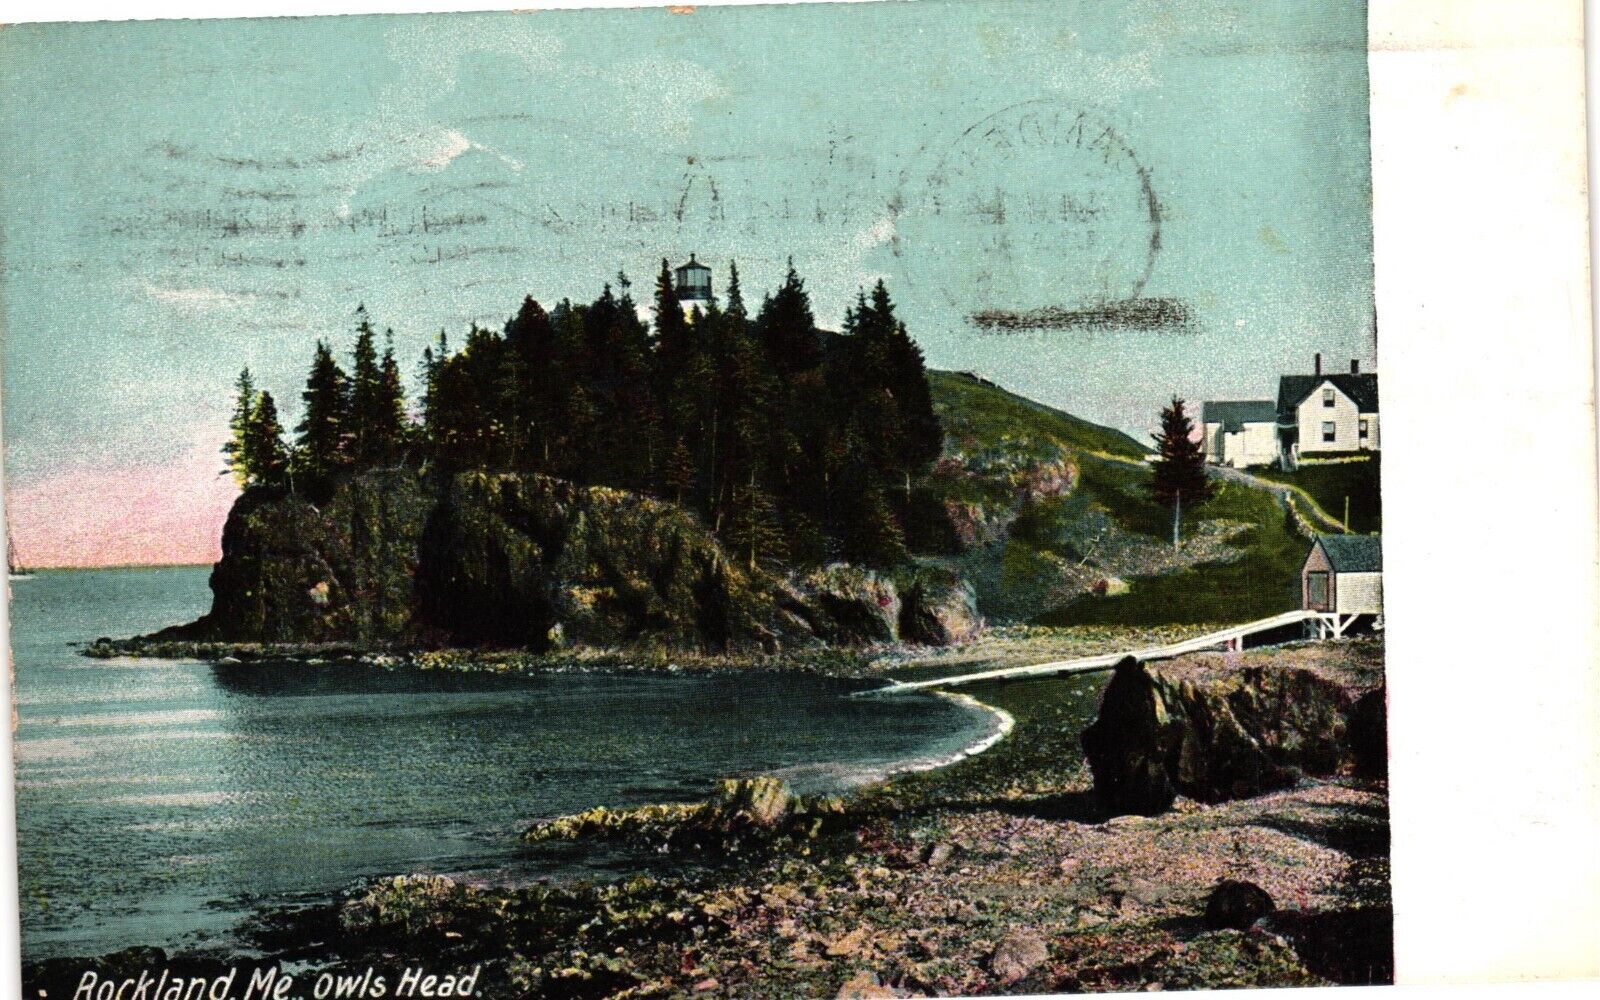 Owls Head Rockland Maine ME Vintage Postcard Divided Back Posted 1909